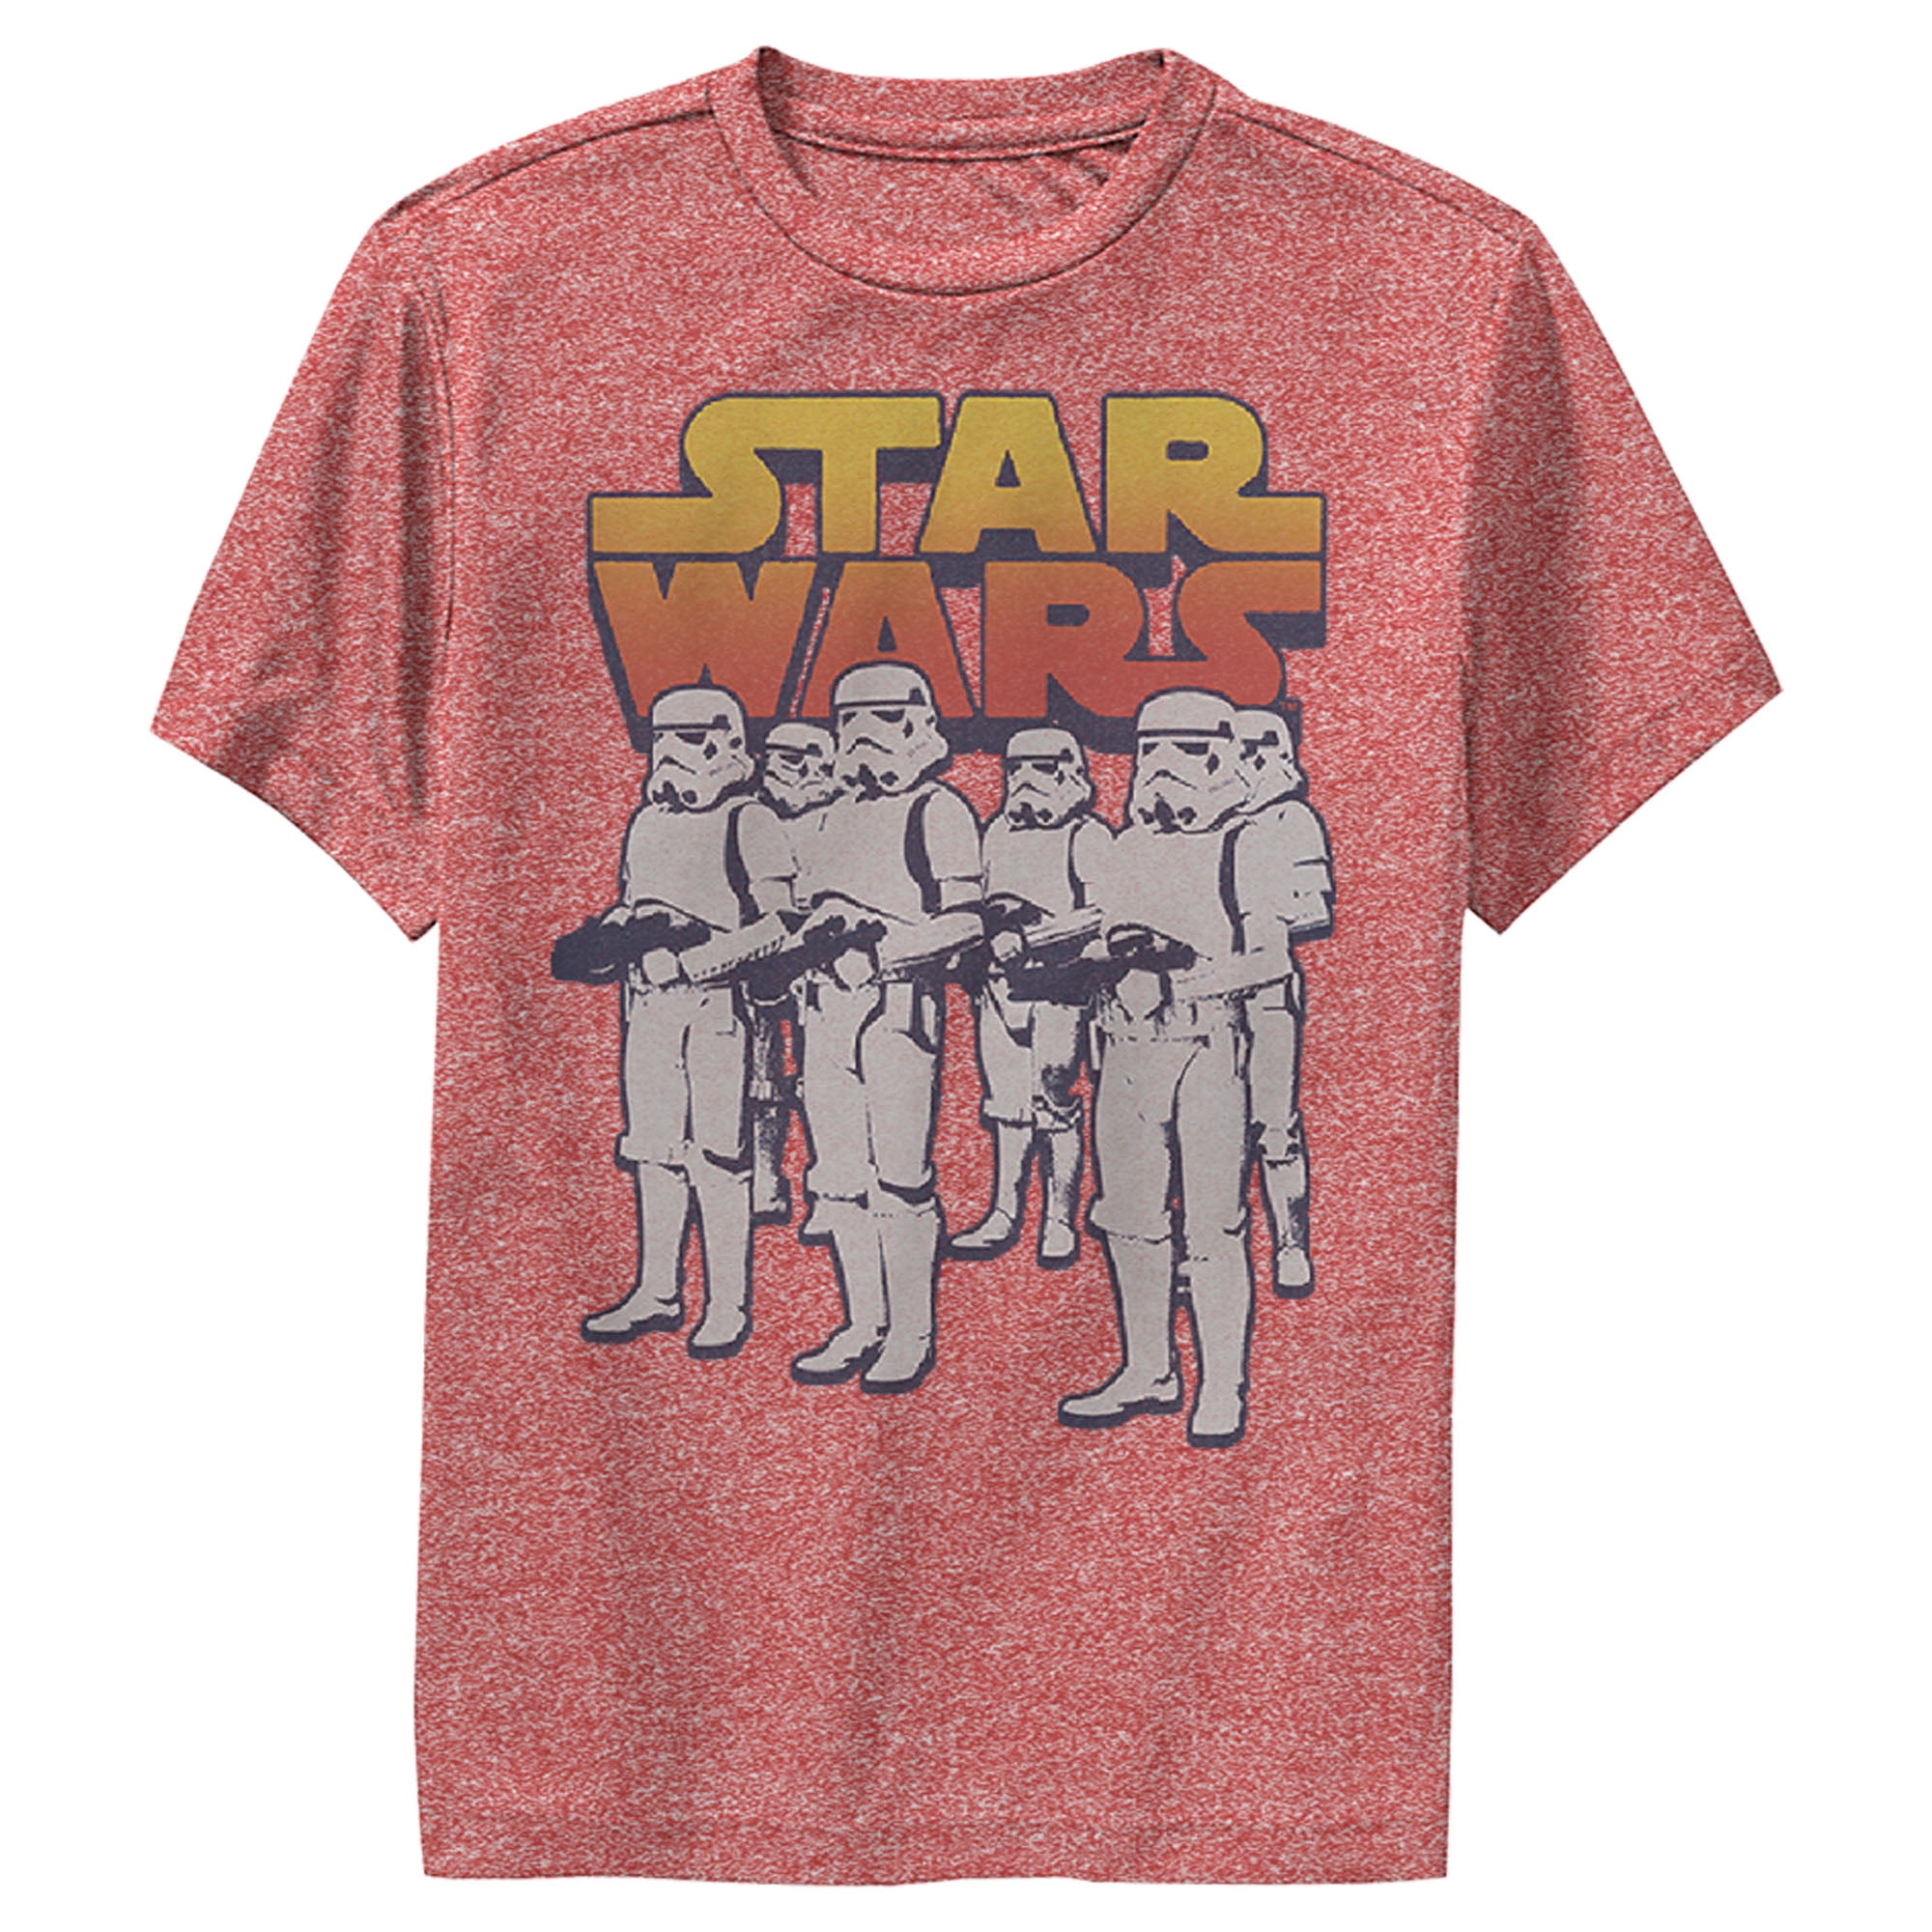 star wars performance shirt